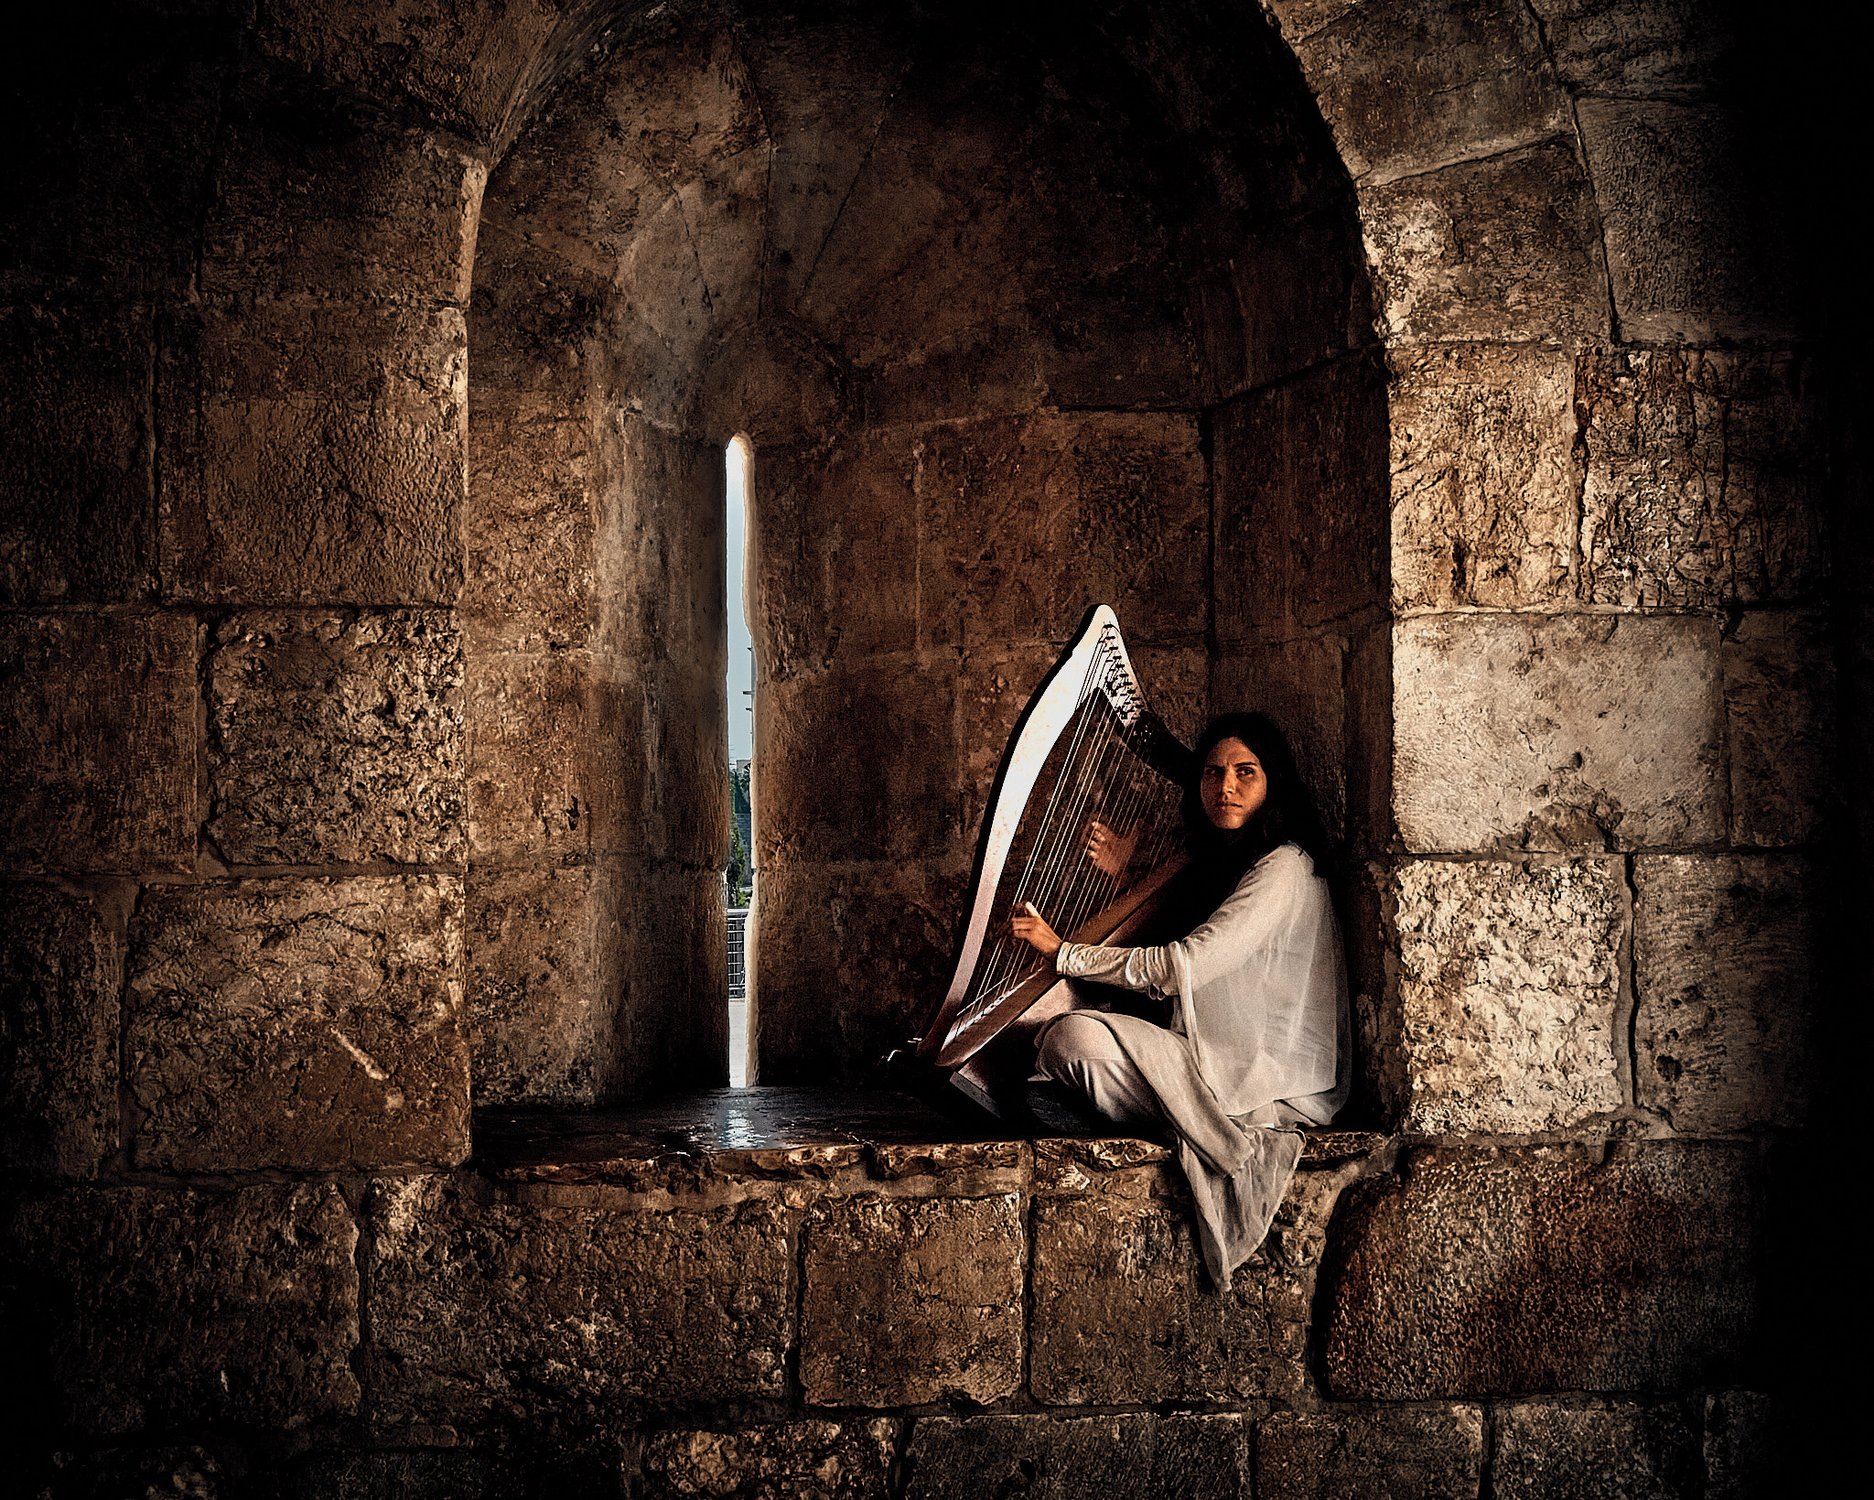 Яффские ворота, Иерусалим